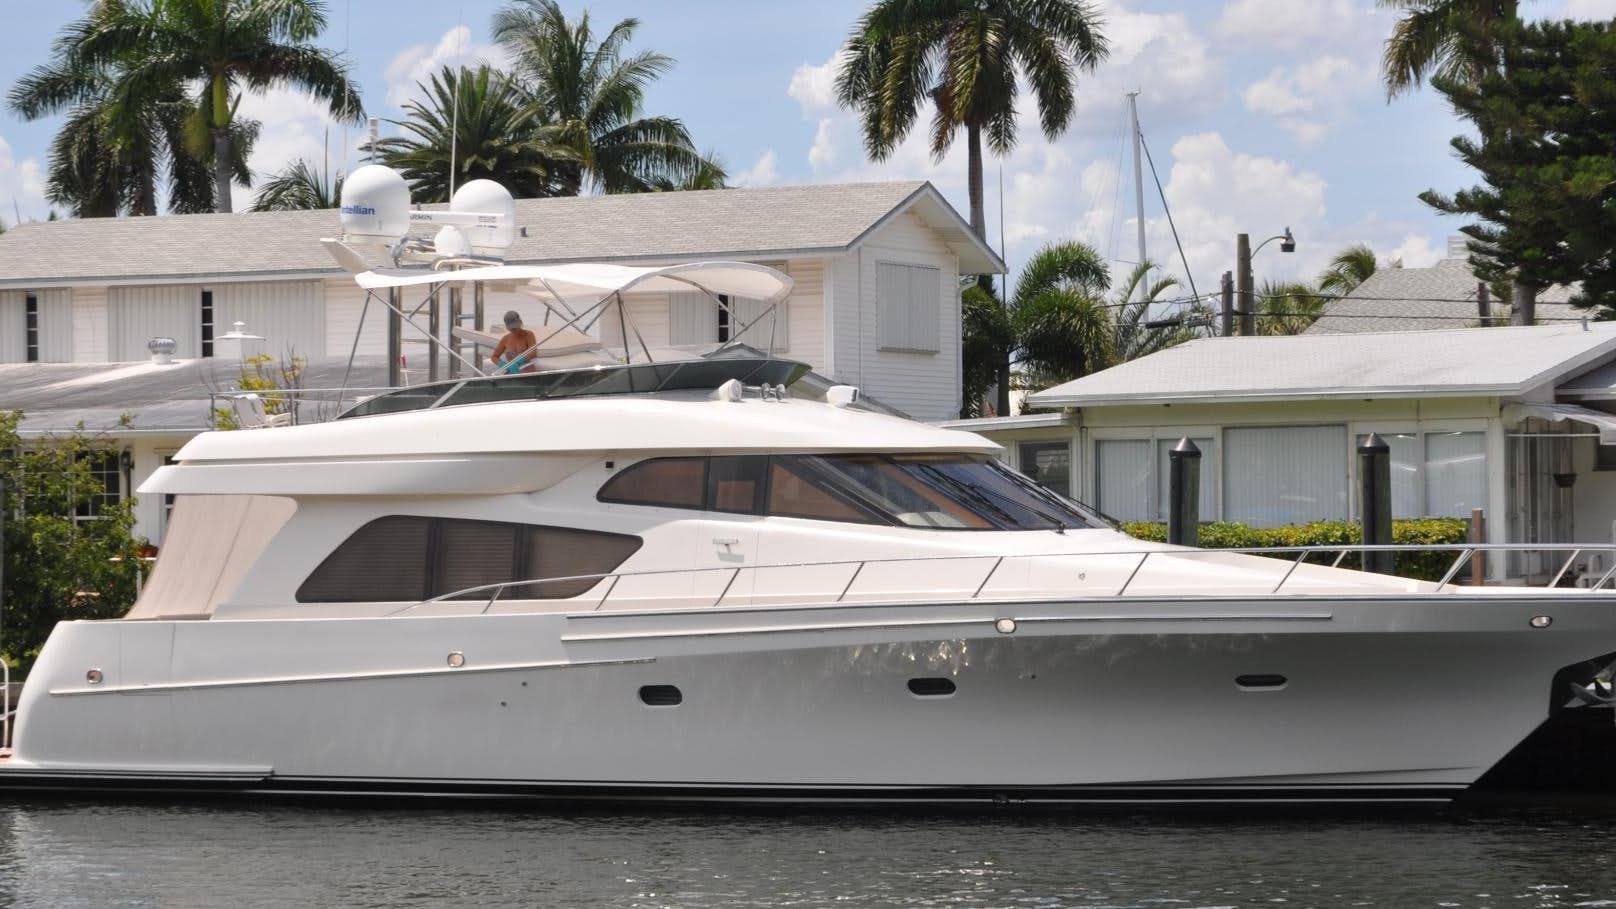 La linda vida
Yacht for Sale